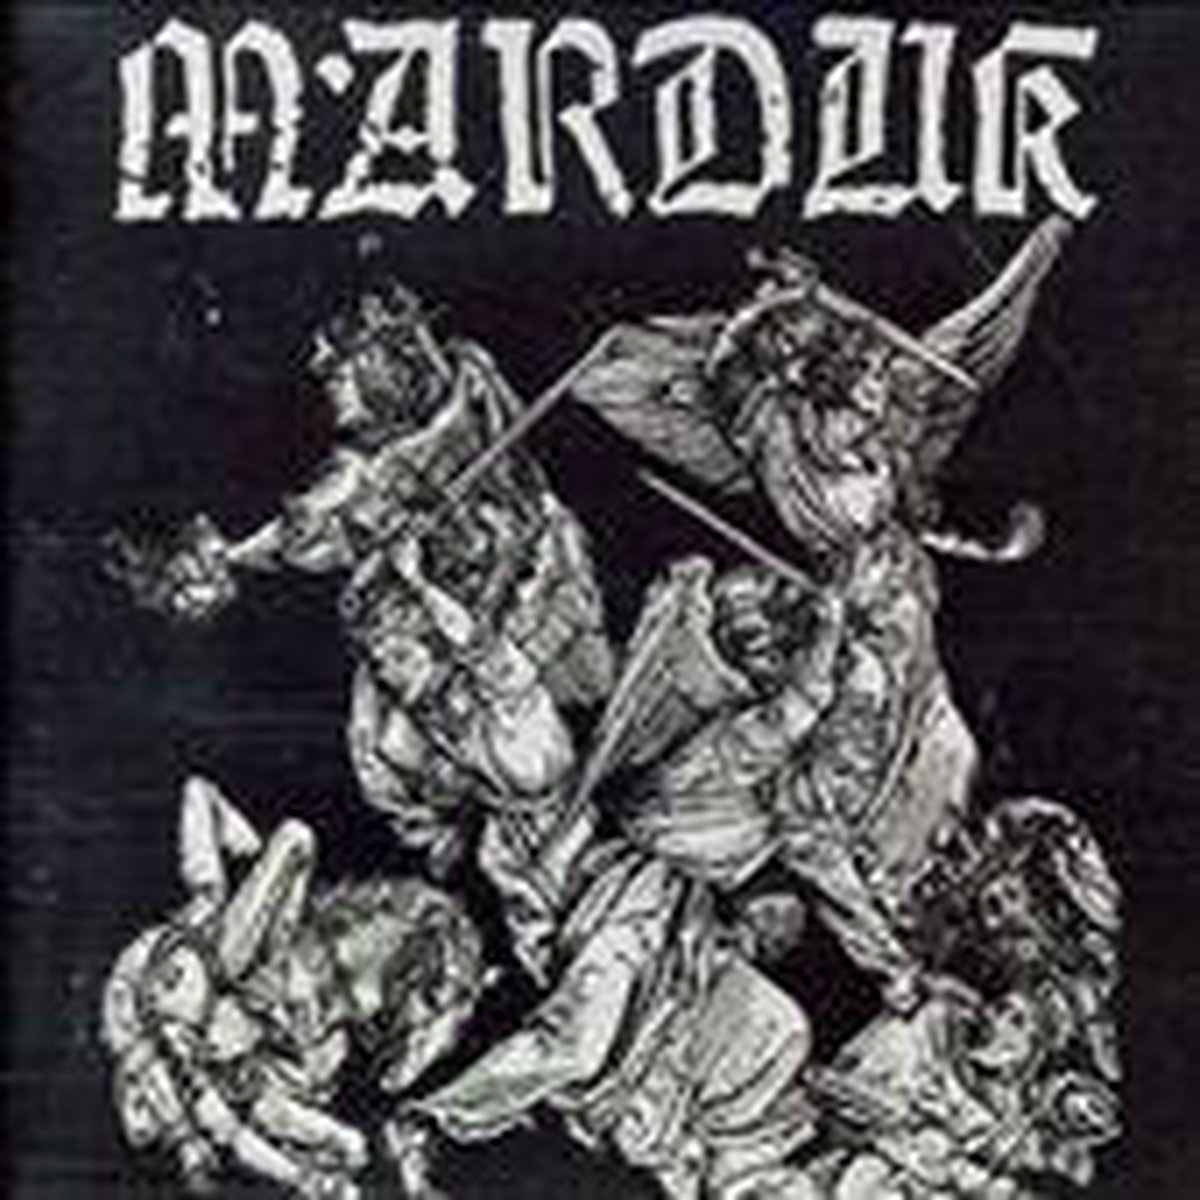 Deathmarch - Marduk